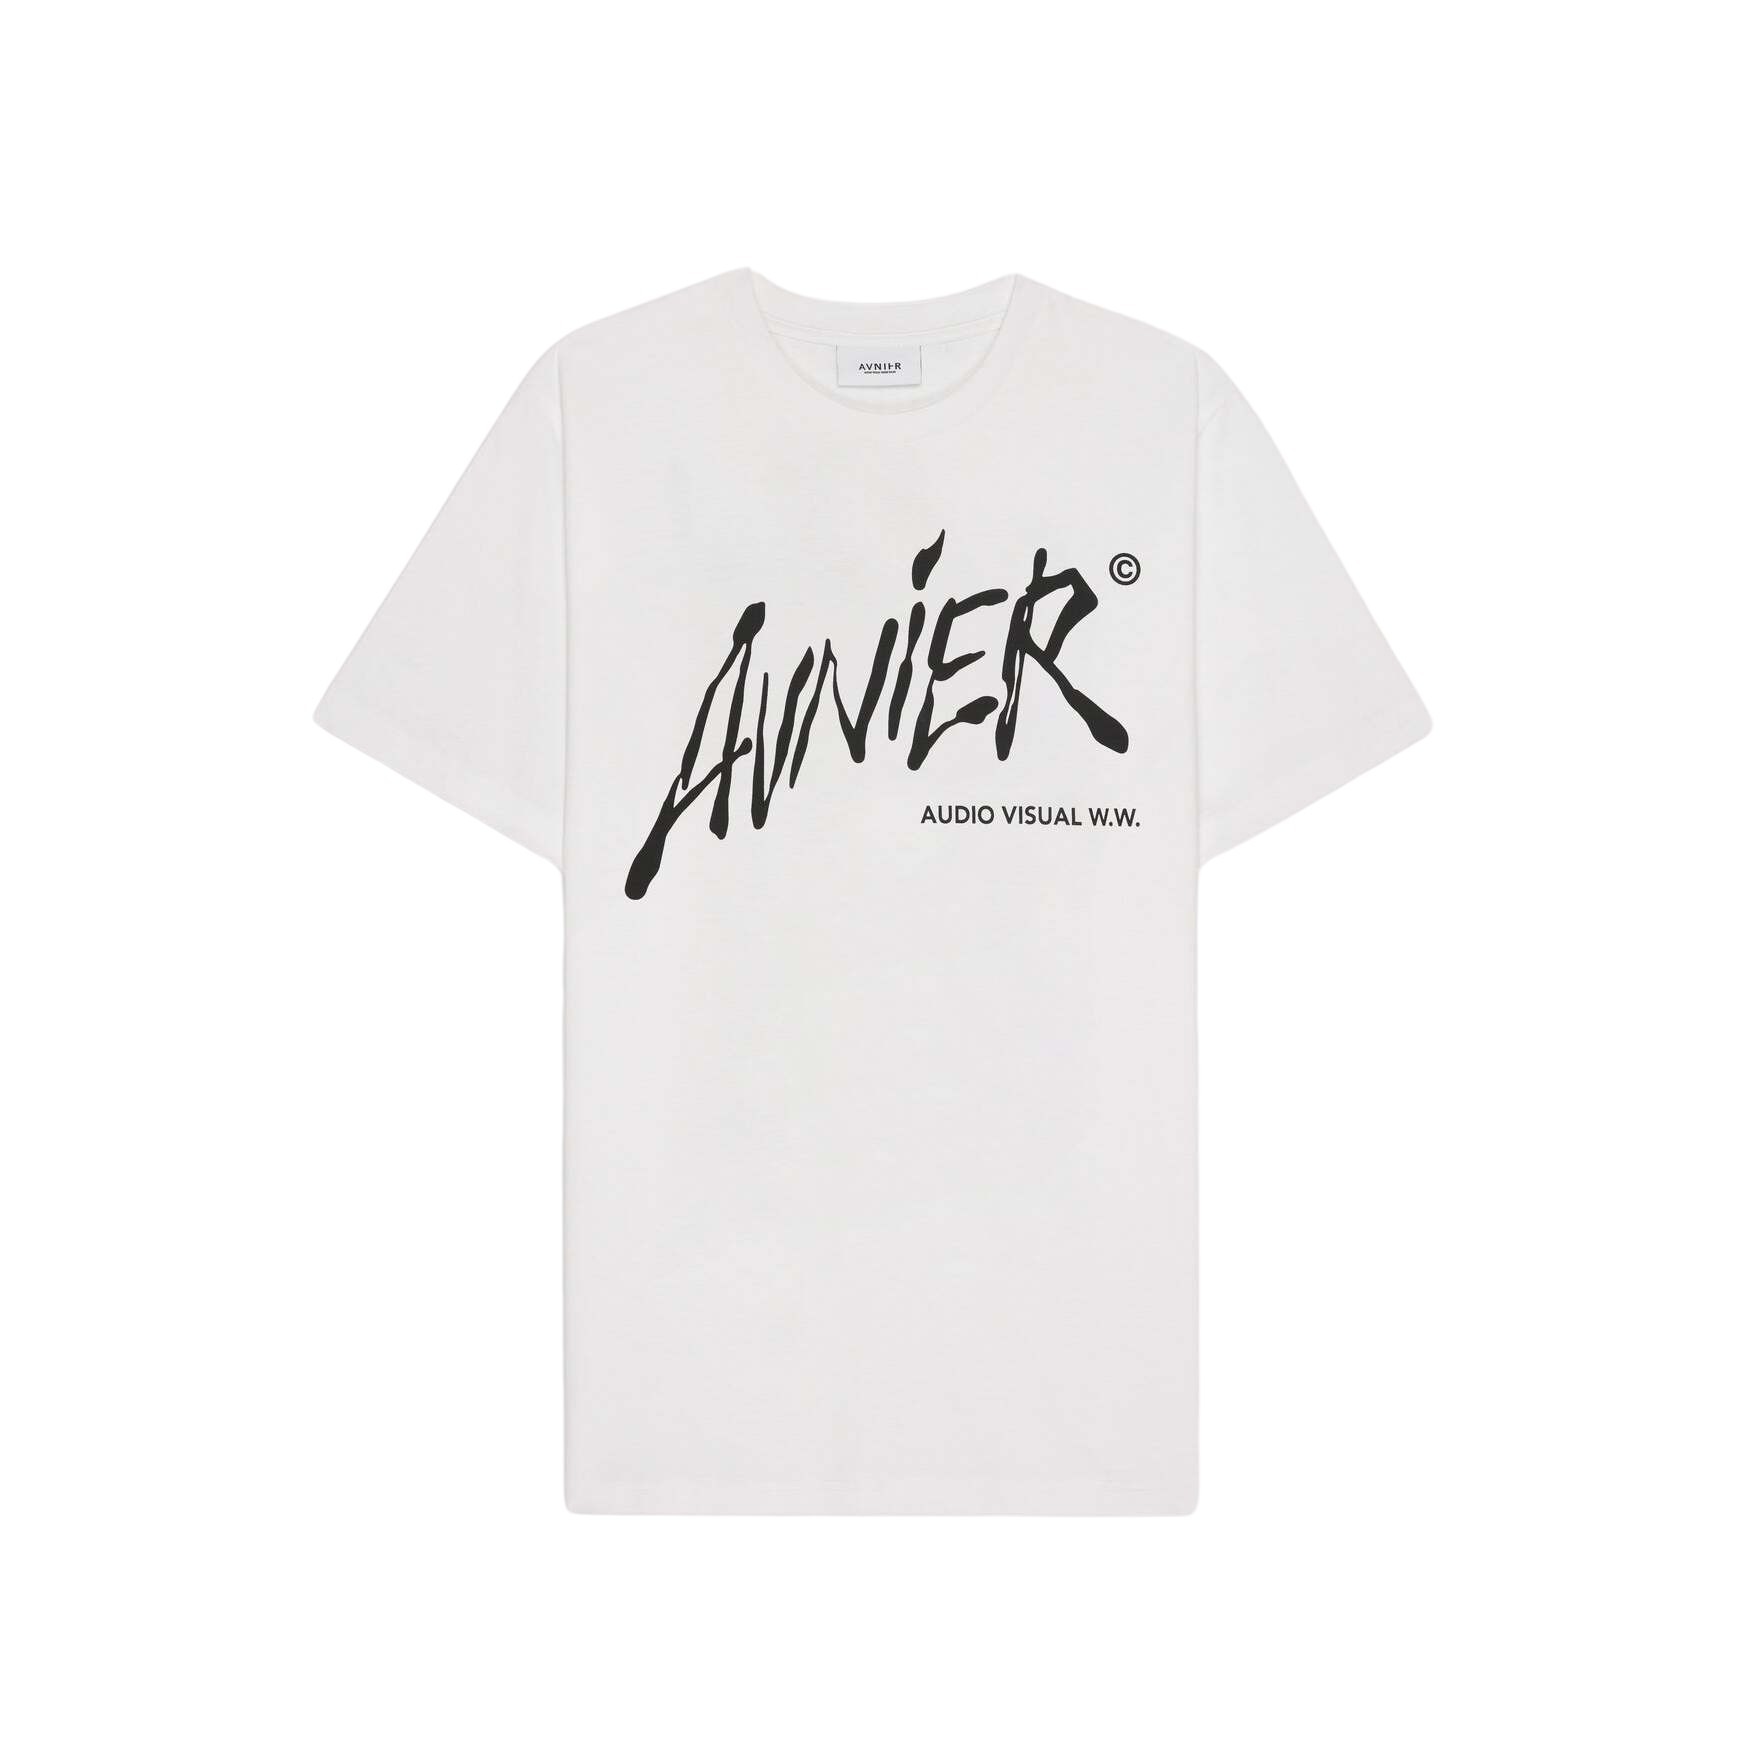 t-shirt avnier source signature